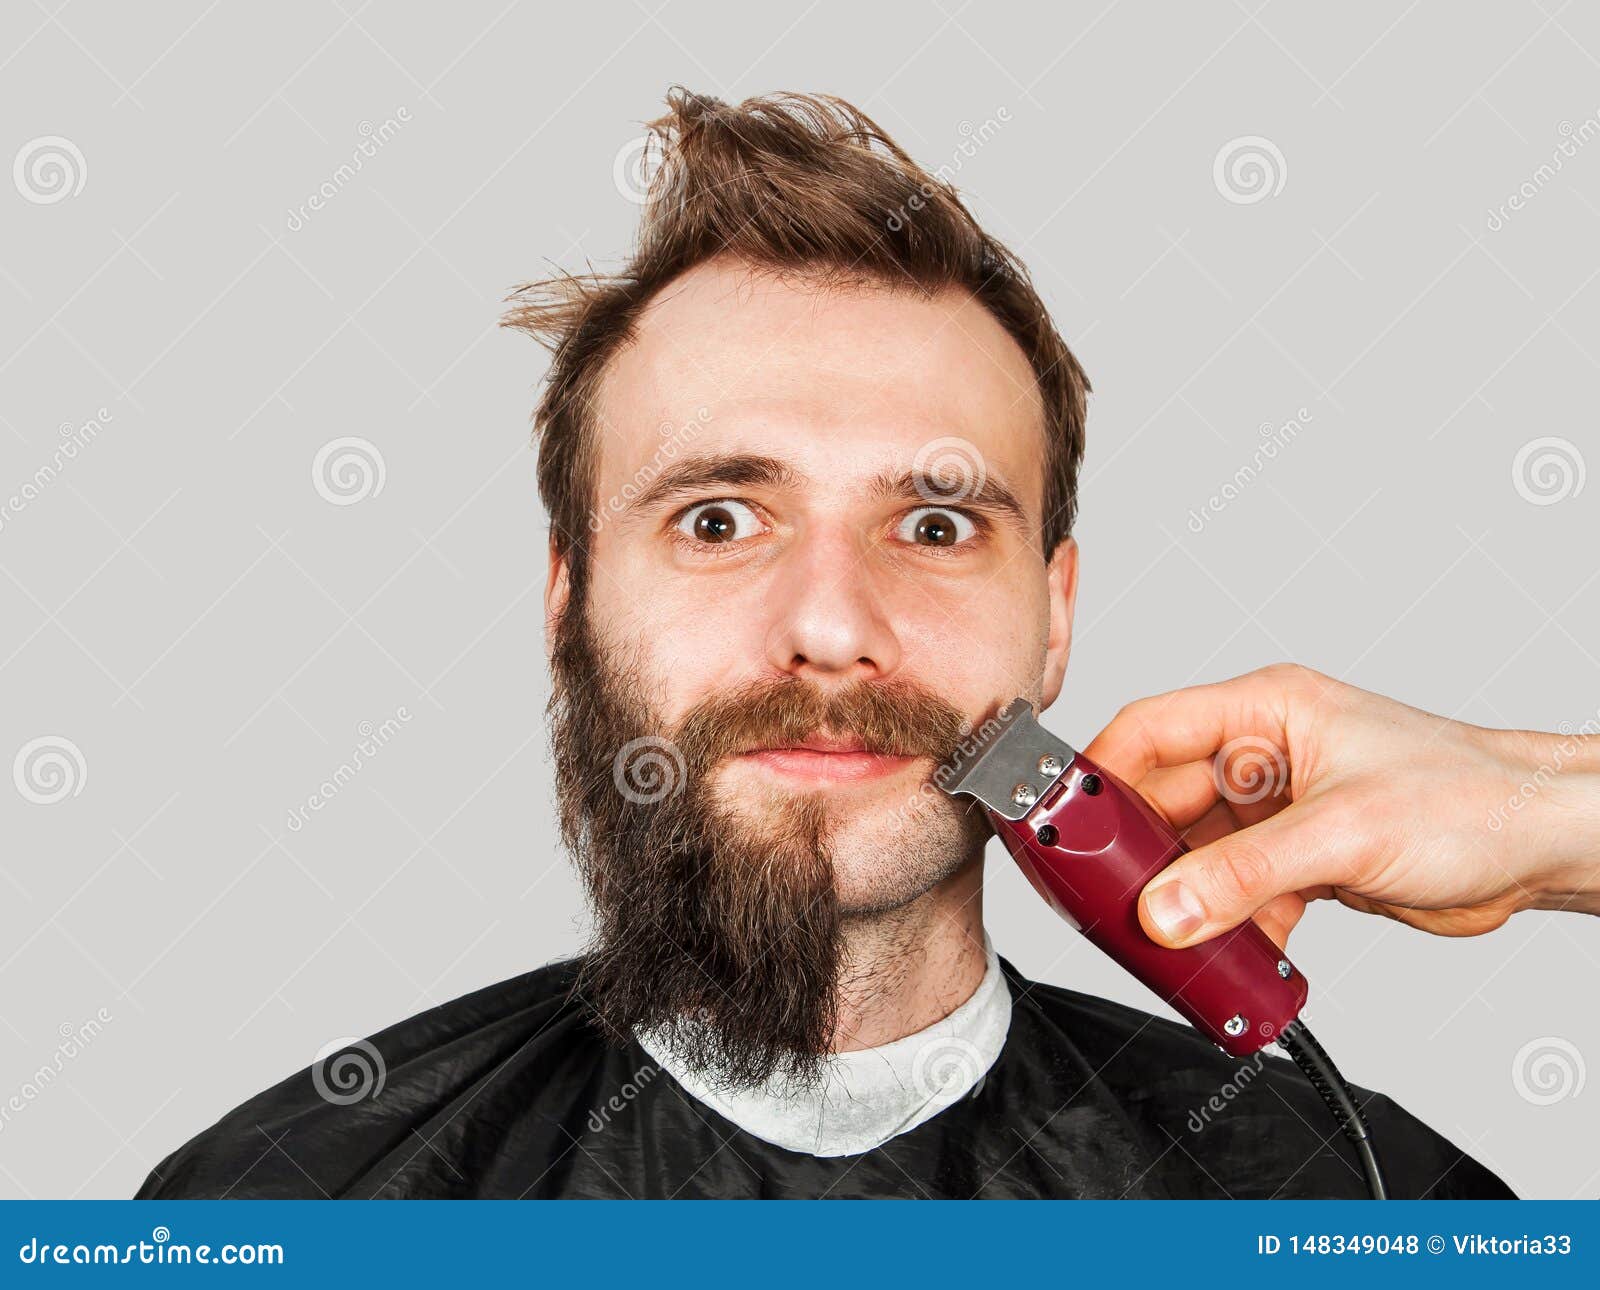 barbershop beard trimmer